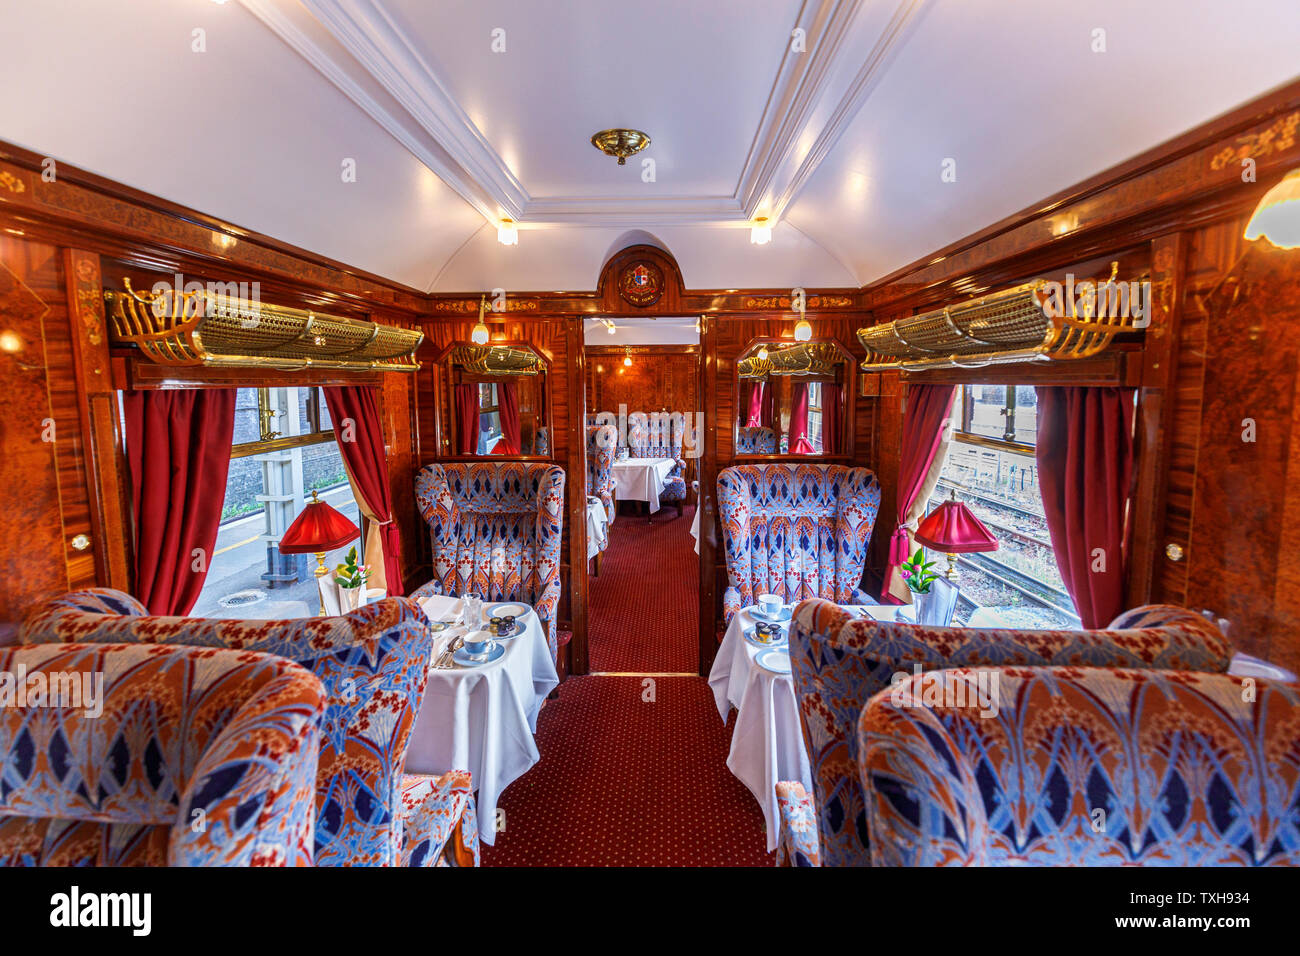 305 Venice Simplon Orient Express Images, Stock Photos, 3D objects